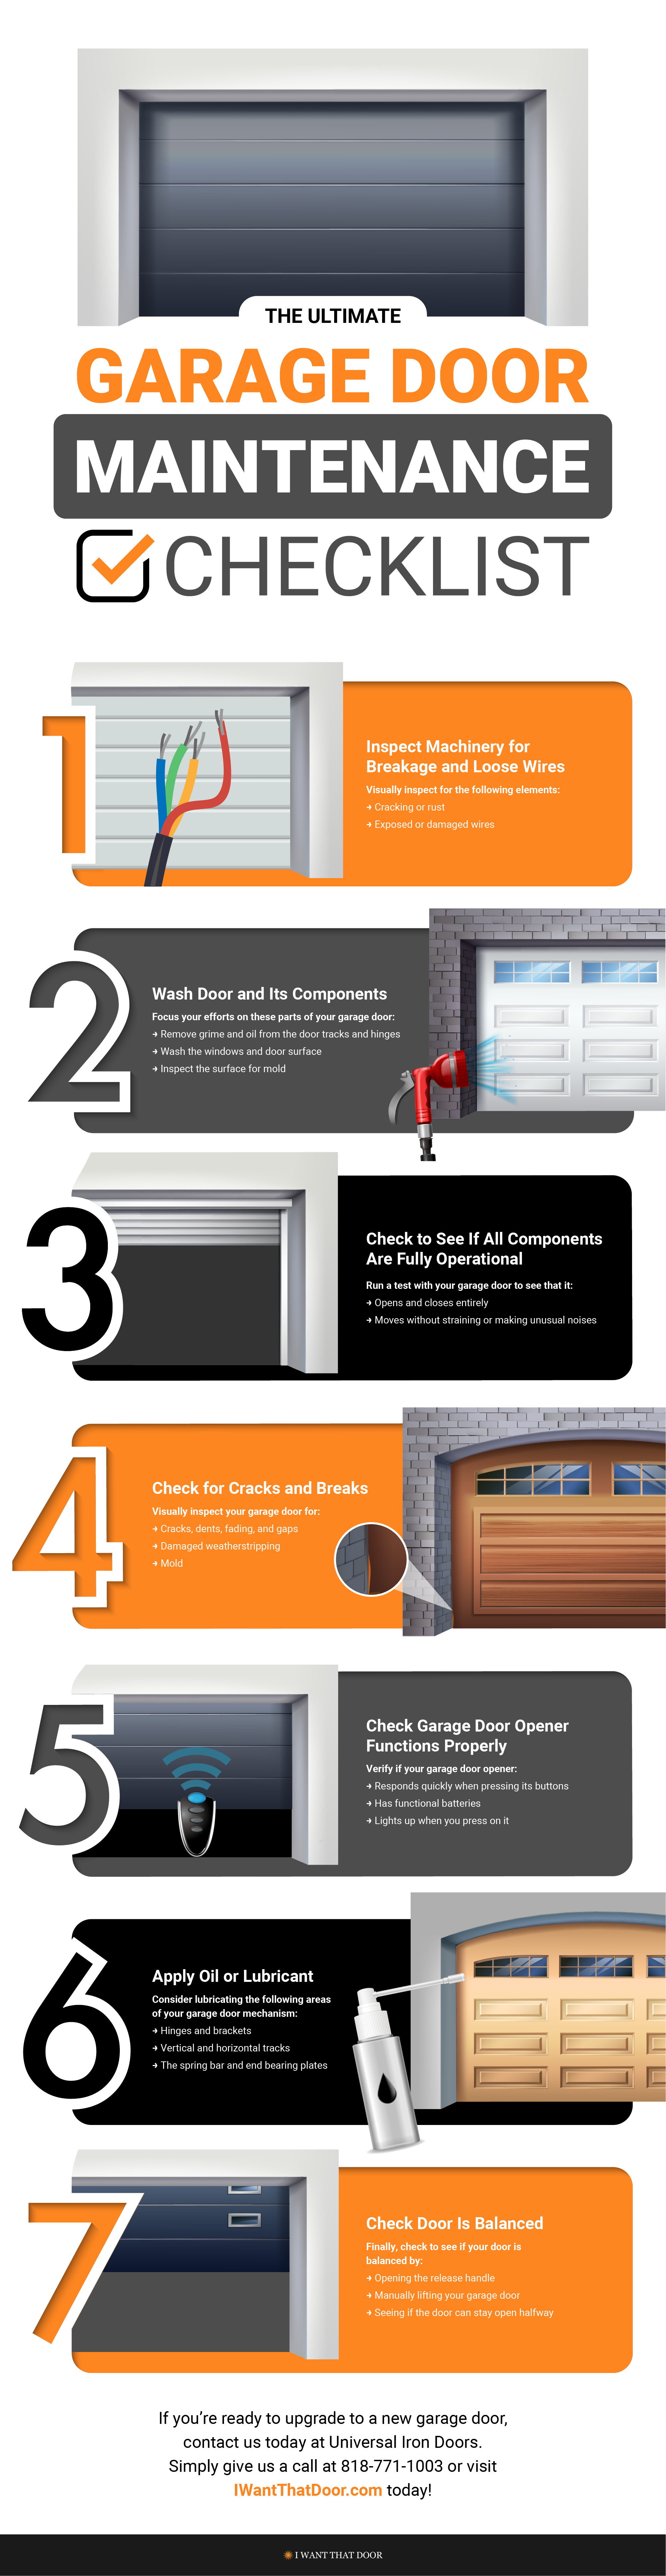 The Ultimate Garage Door Maintenance Checklist Infographic